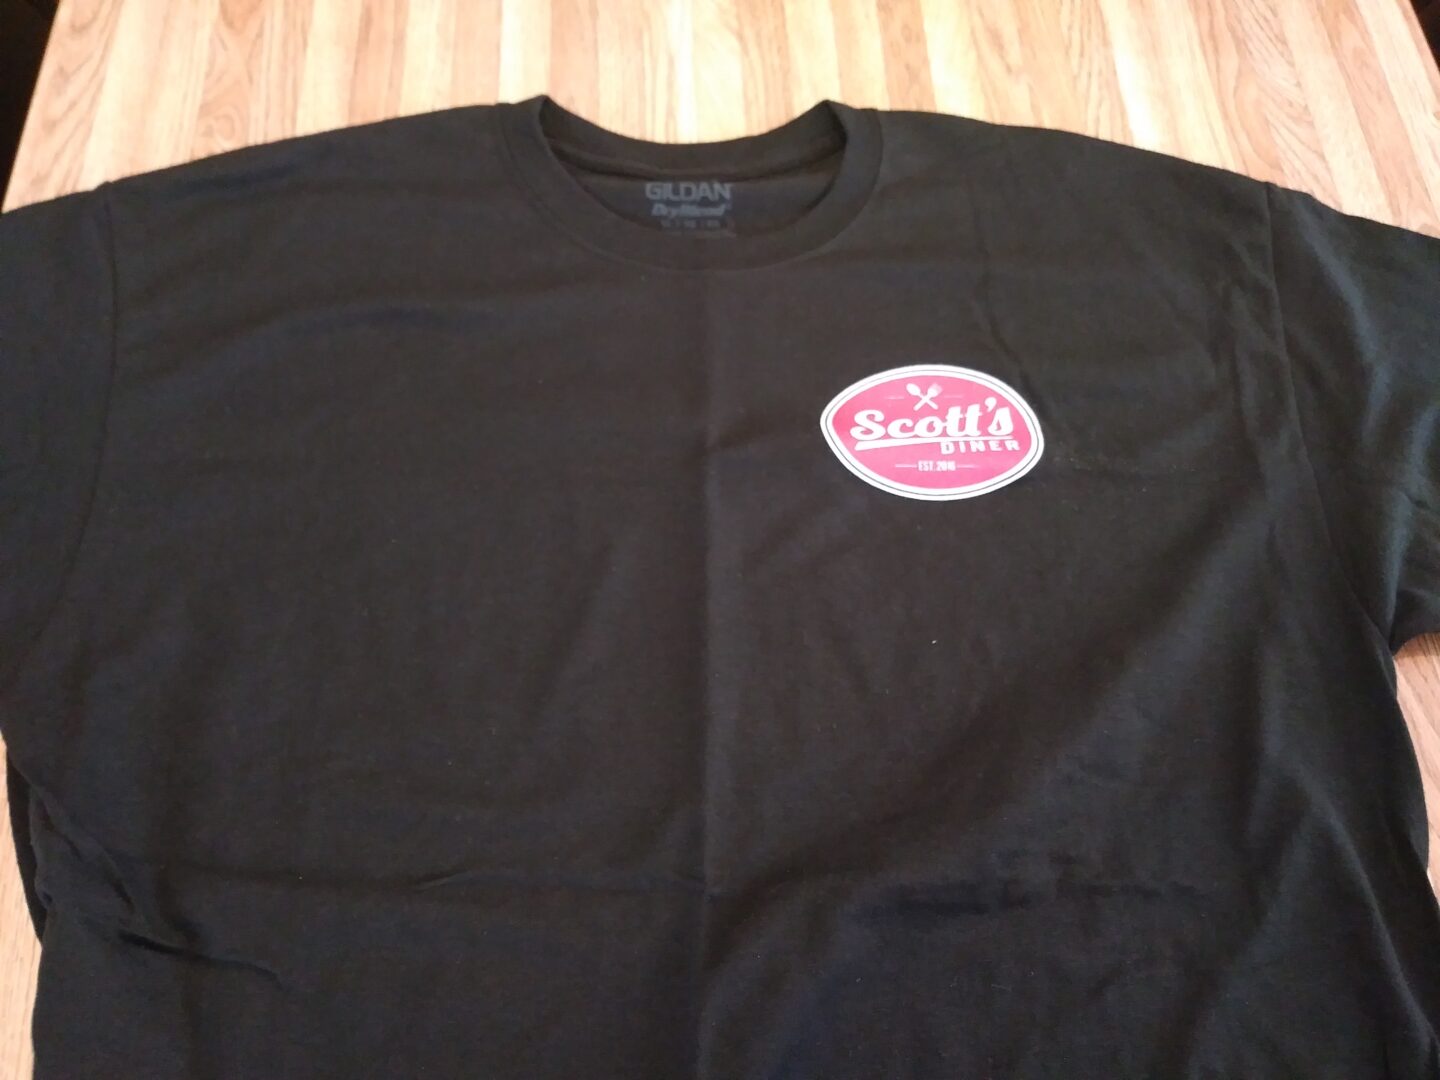 Black shirt with logo